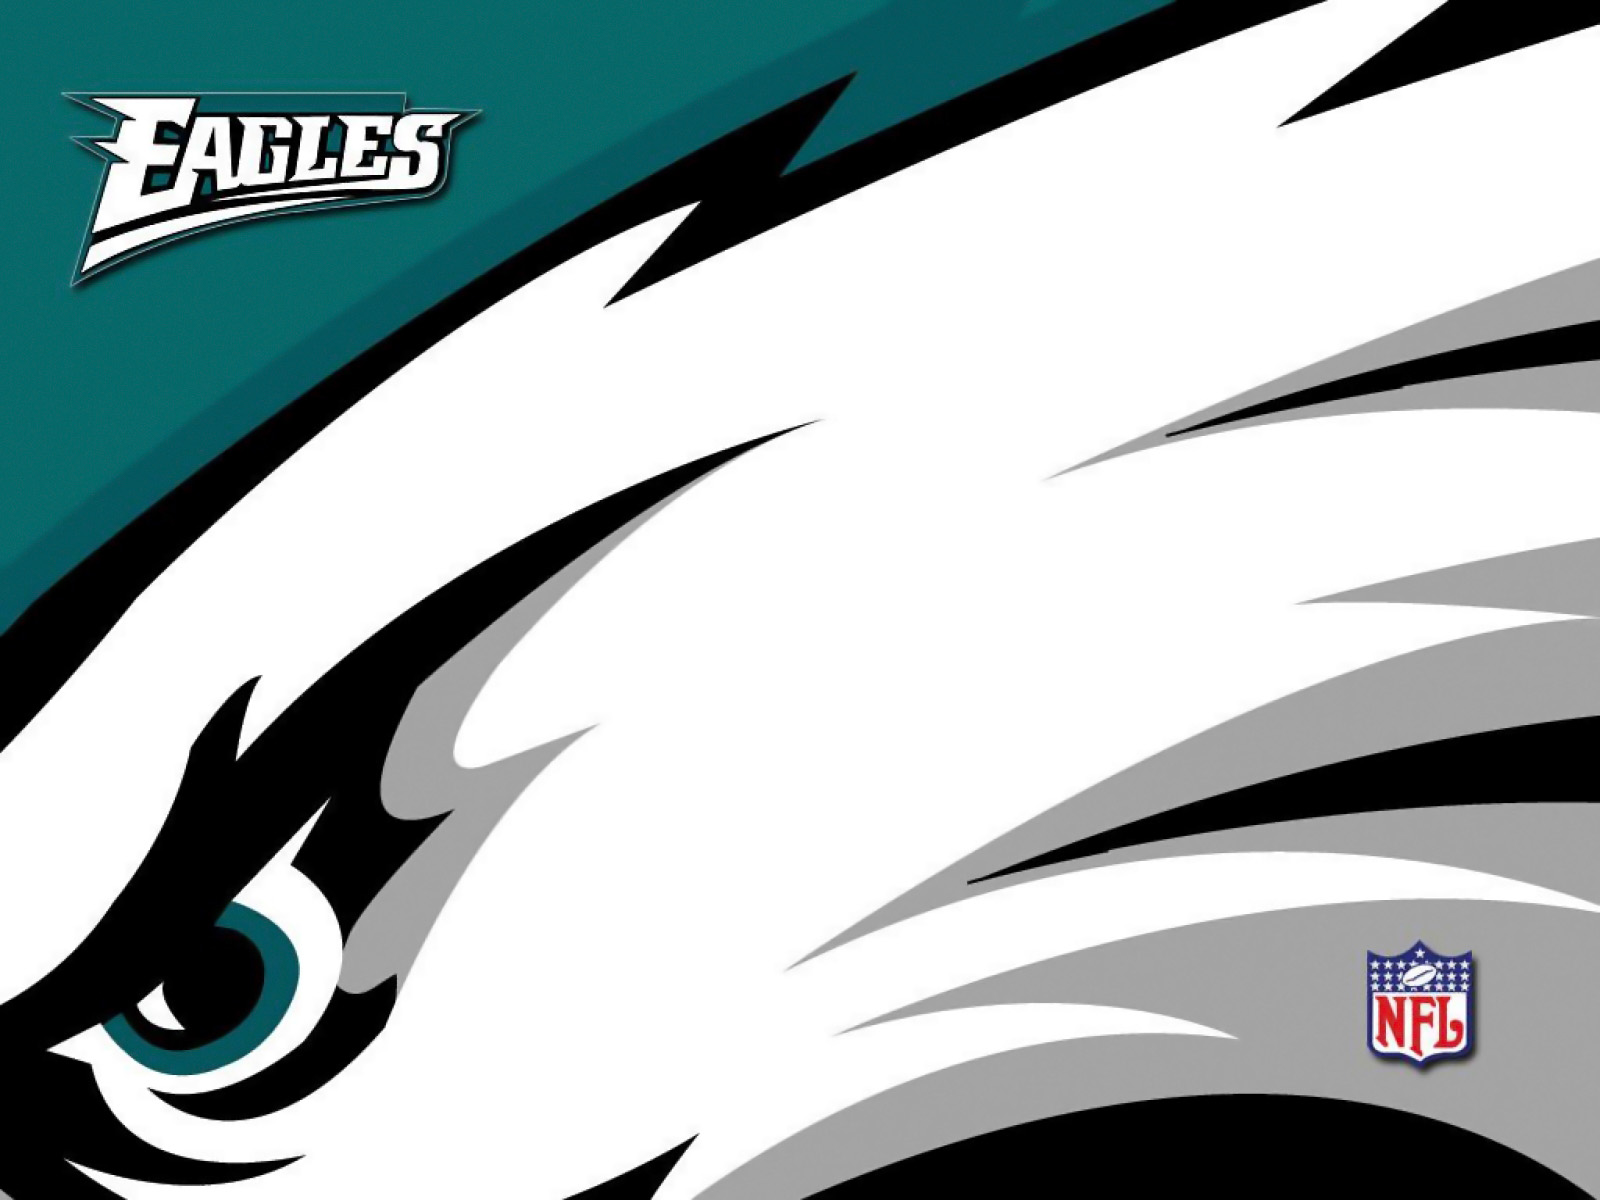 Philadelphia Eagles - HD Wallpaper 